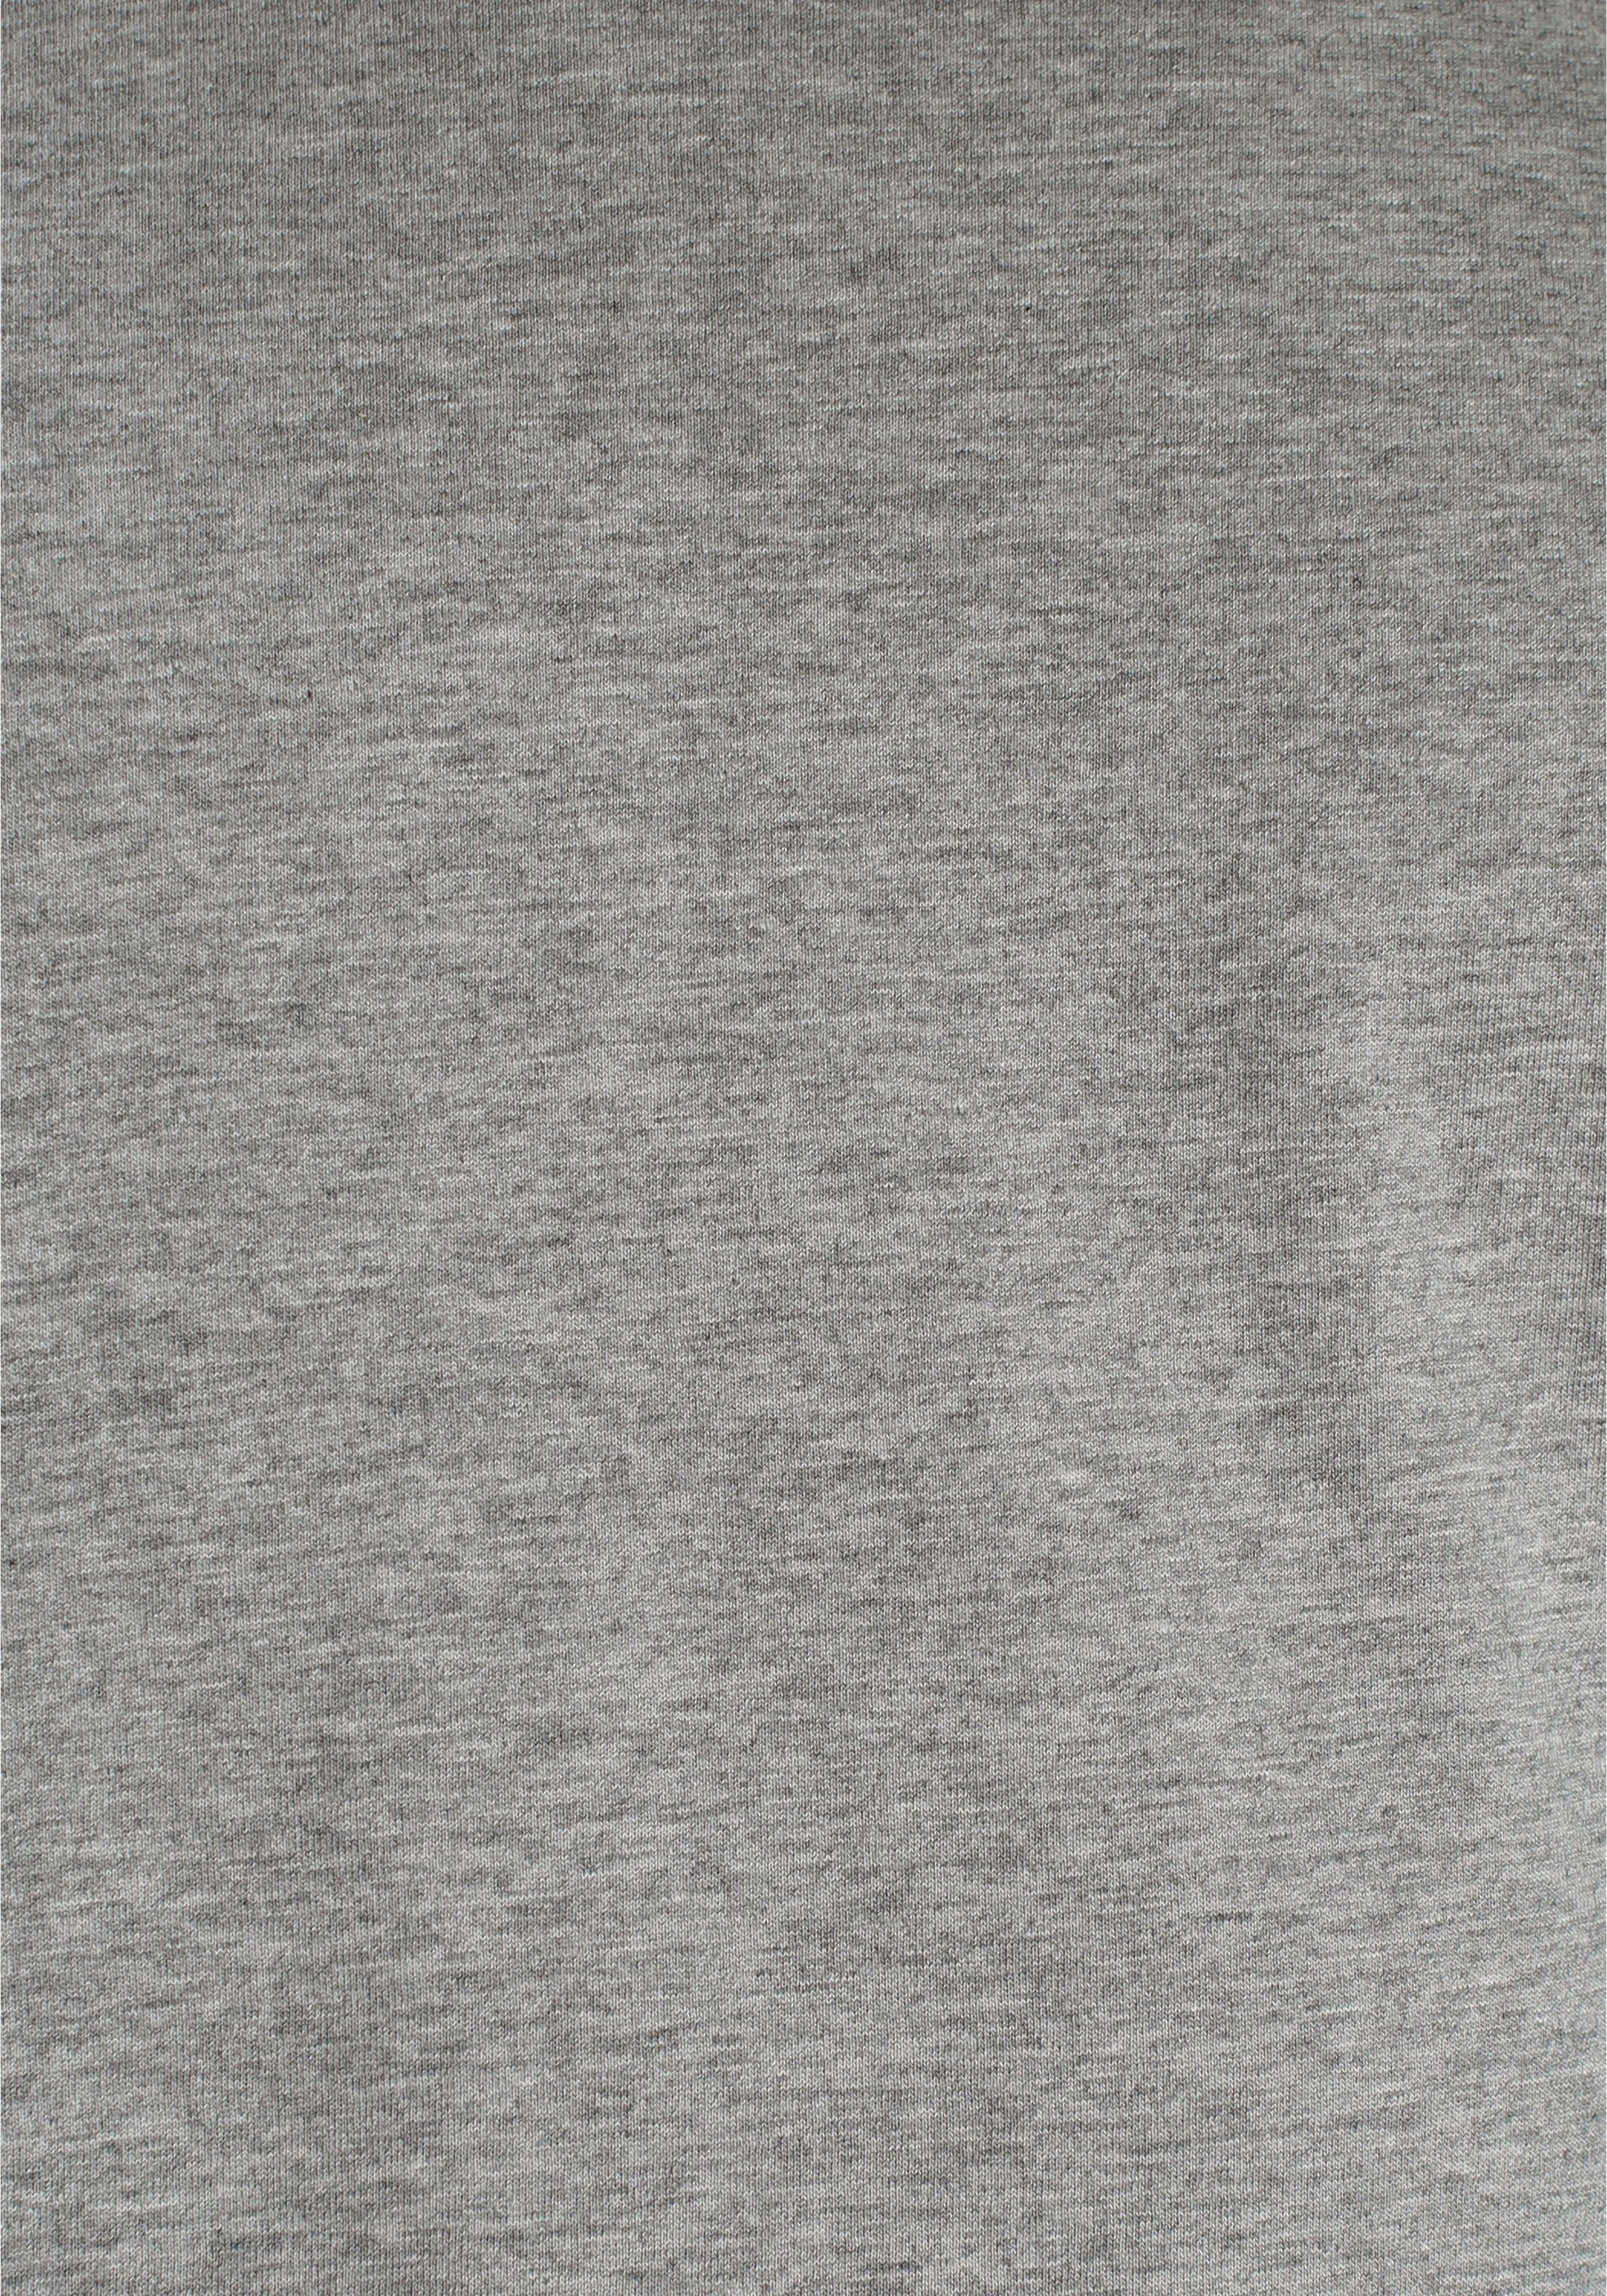 (Packung, 2-tlg) Champion Classic T-Shirt grau+schwarz Crewneck T-Shirt 2pack